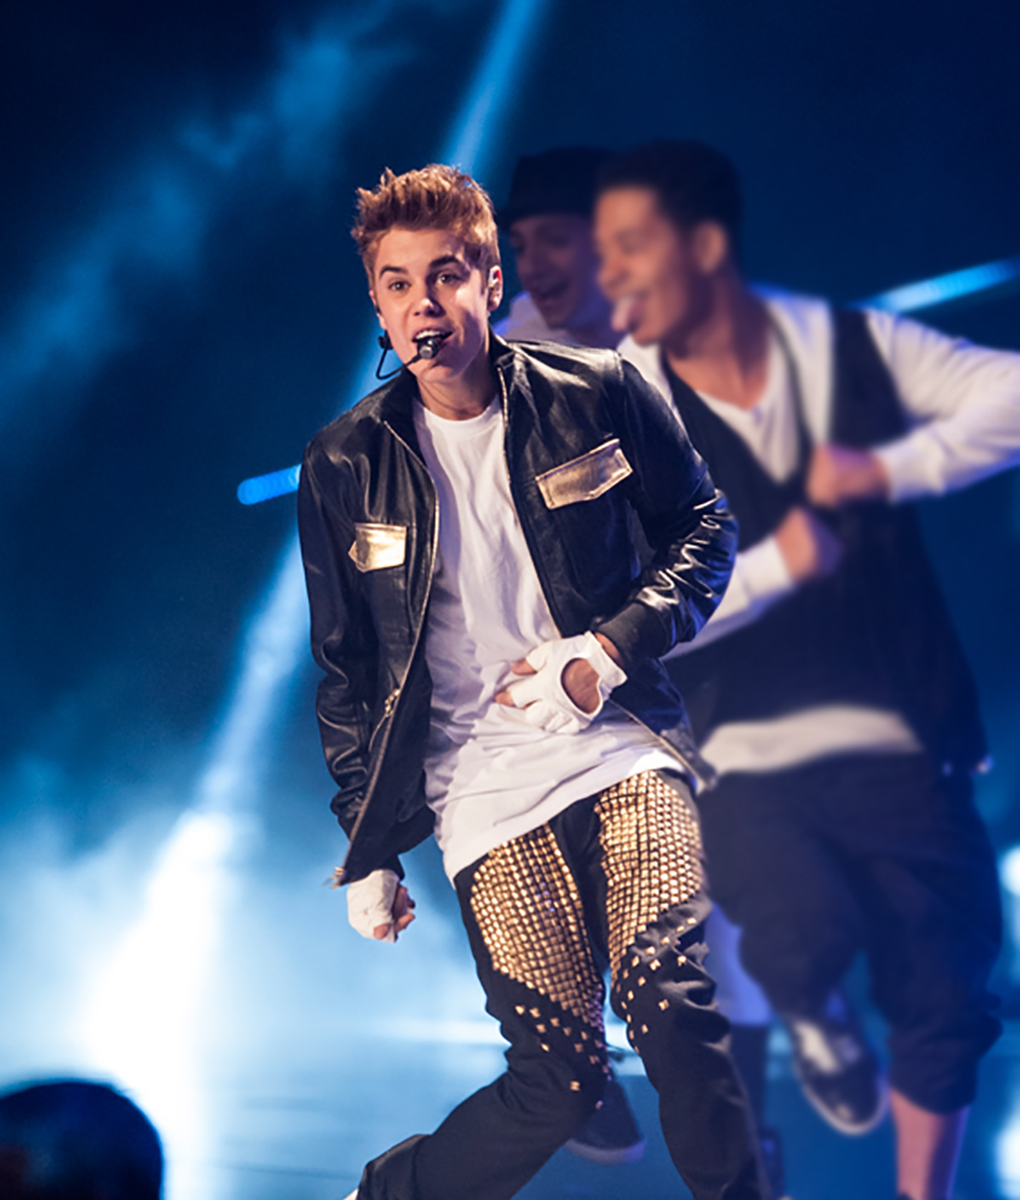 Germanys-Next-Topmodel-Justin-Bieber-Jacket-1